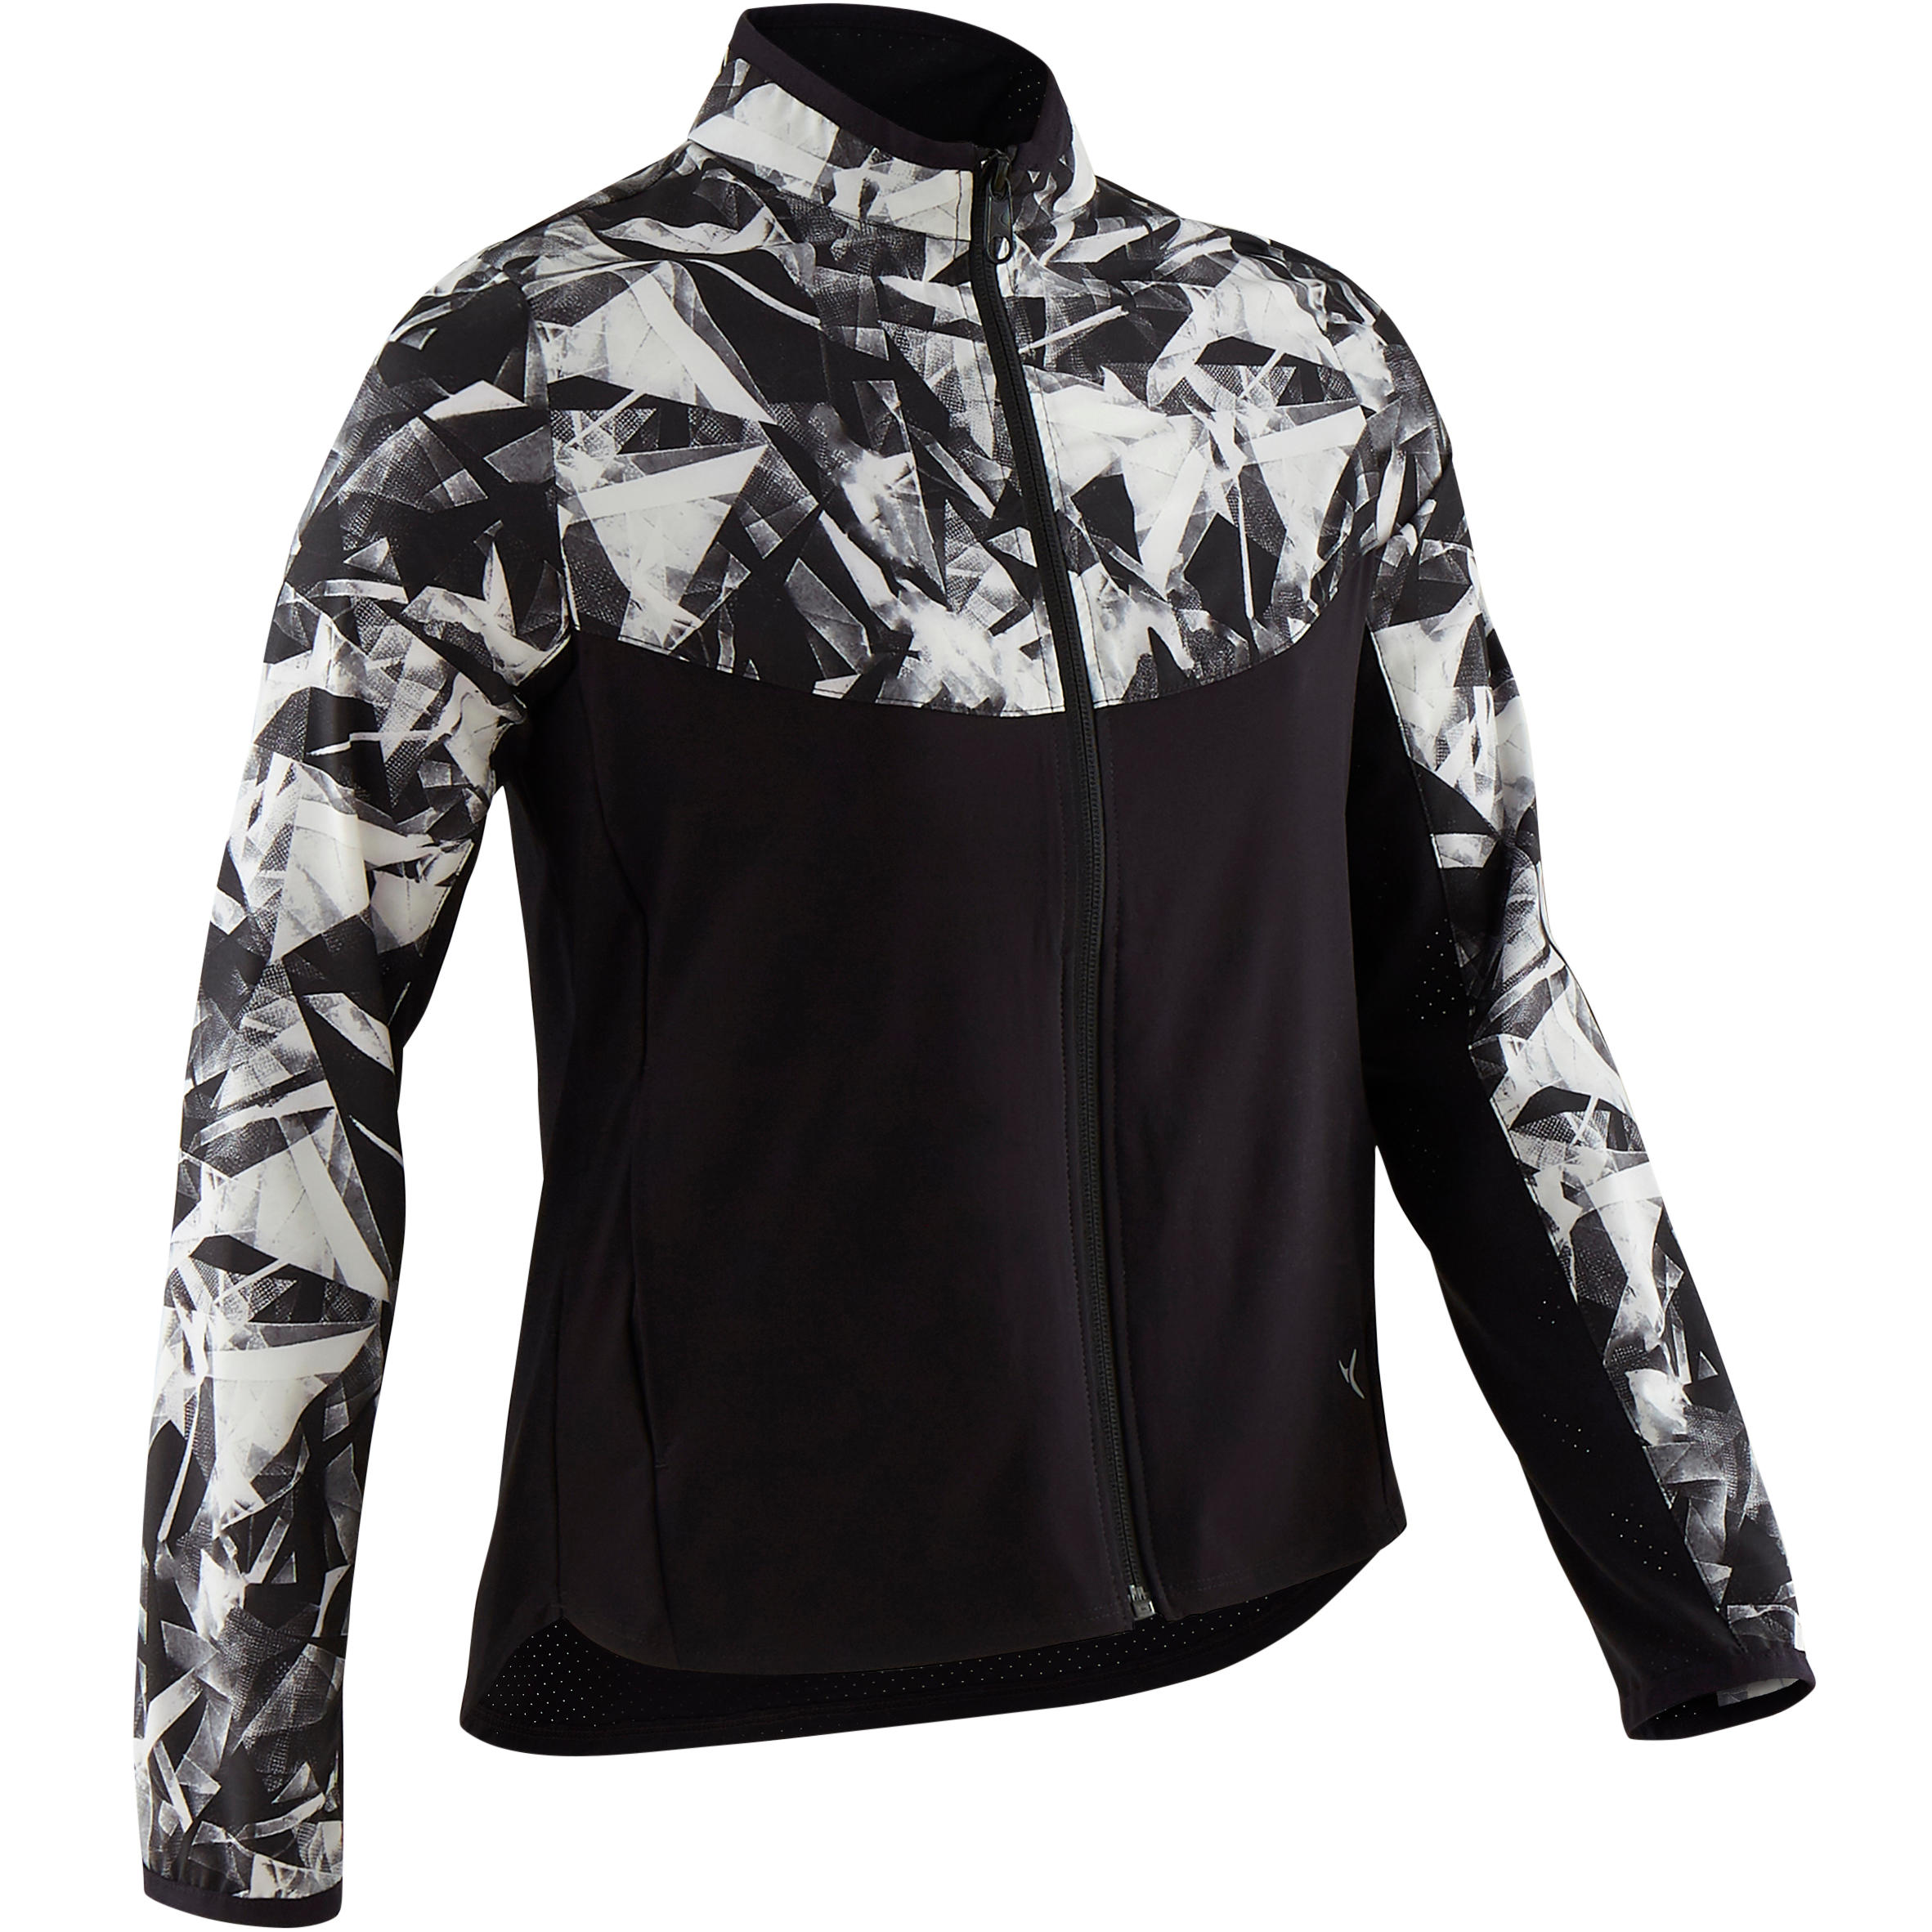 DOMYOS Girls' Light Breathable Gym Jacket W500 - Black Print